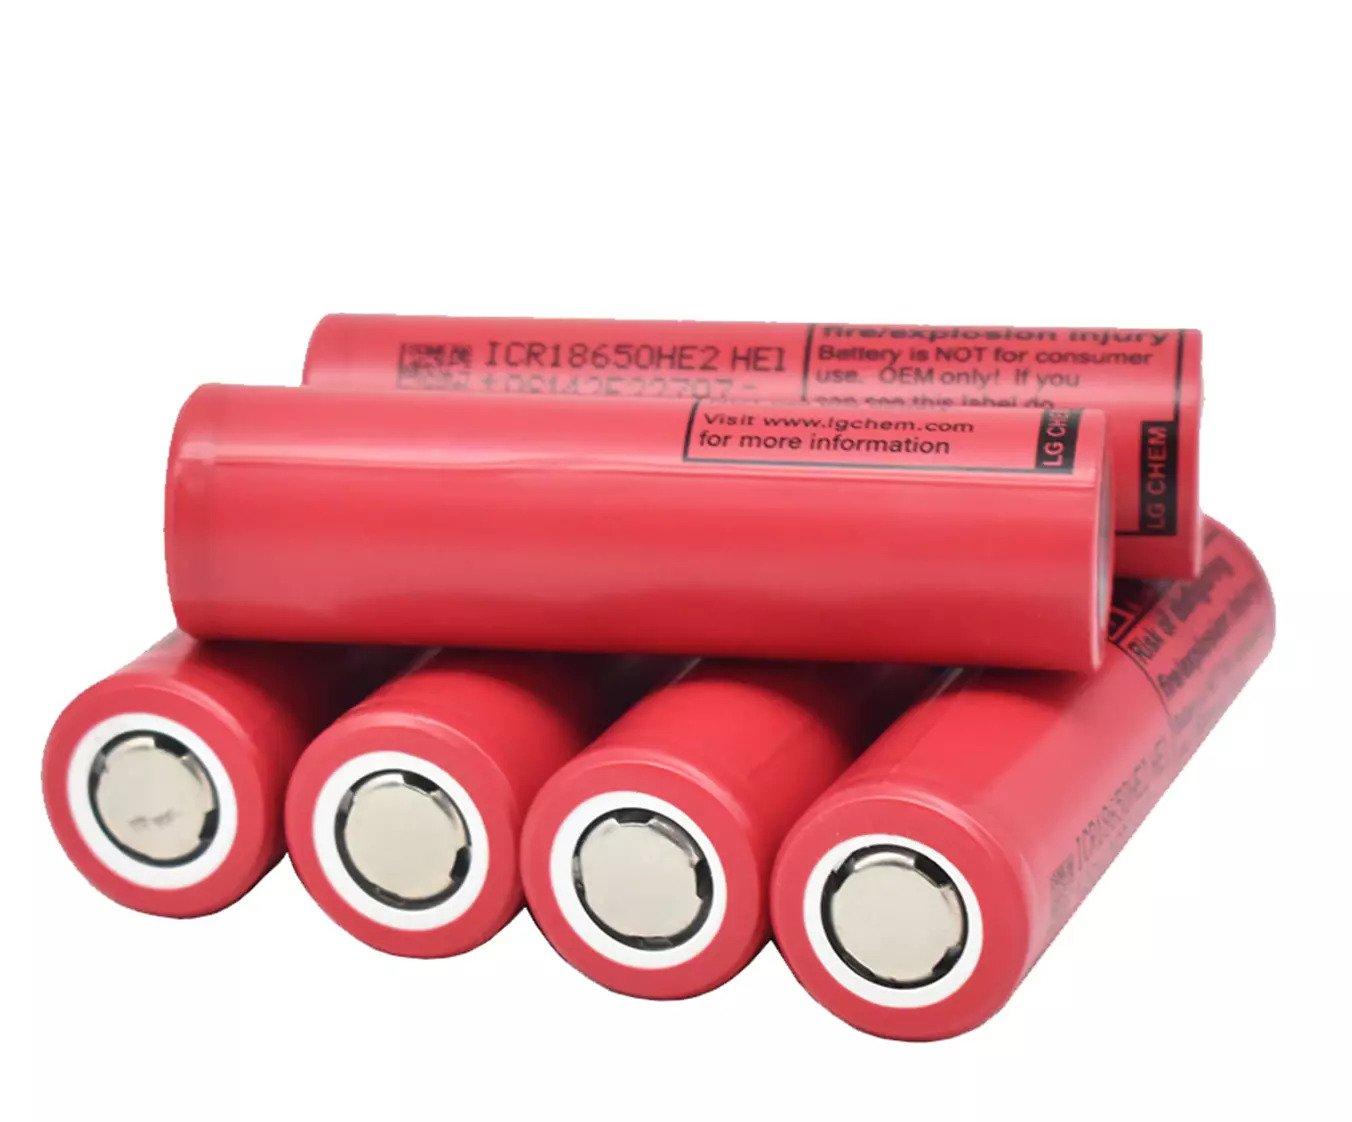 Baterie LG HE2 18650, 2500mAh, 20A, 3,6V, třída A, lithium-iontová (LGDBHE21865)